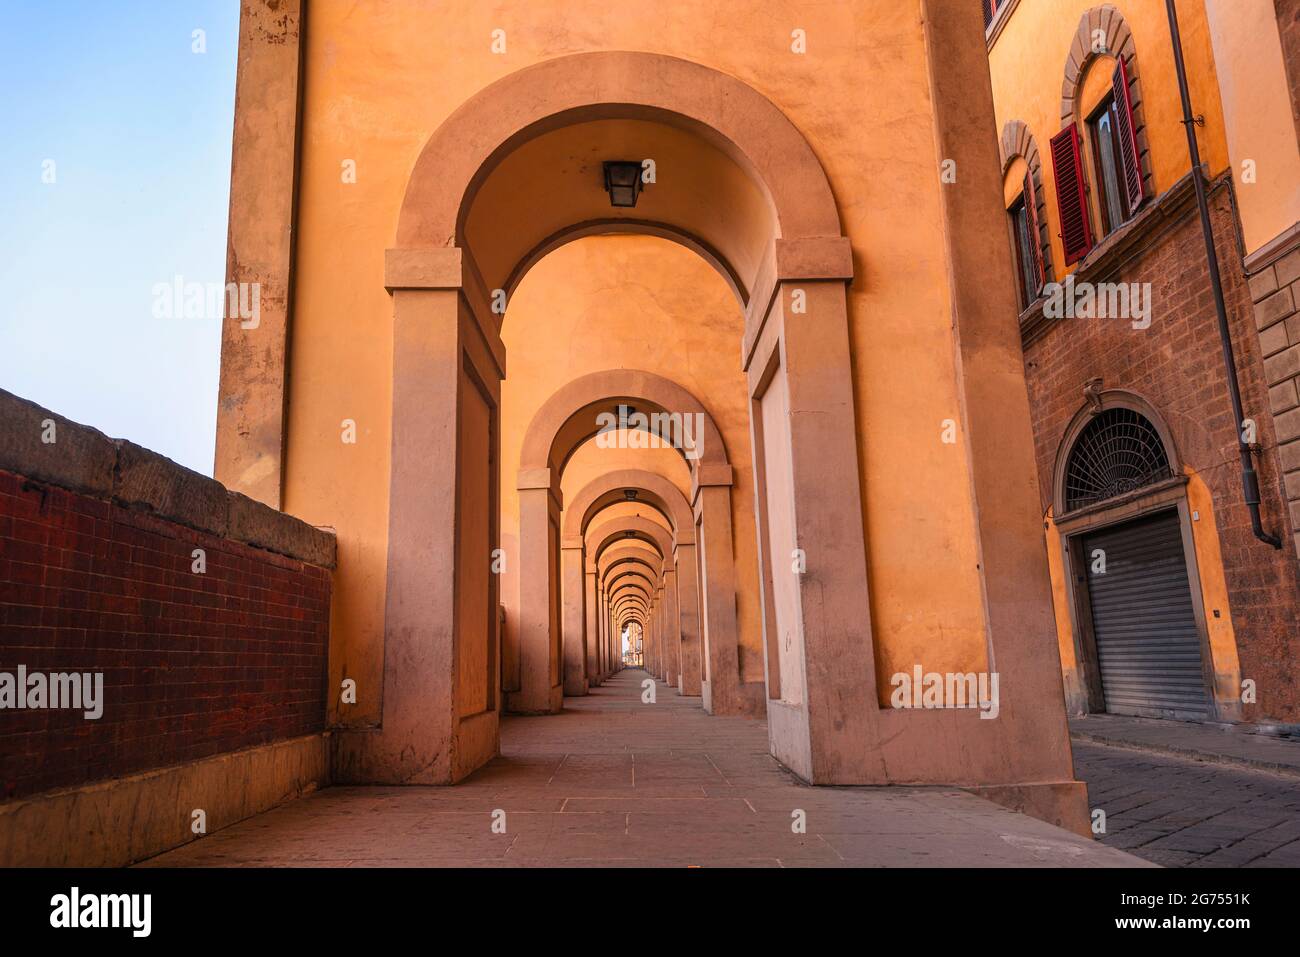 Corridoio Vasariano Passage, Florence, Italy. Beautiful symmetrical, warm yellow architecture. Vasari Corridor Stock Photo